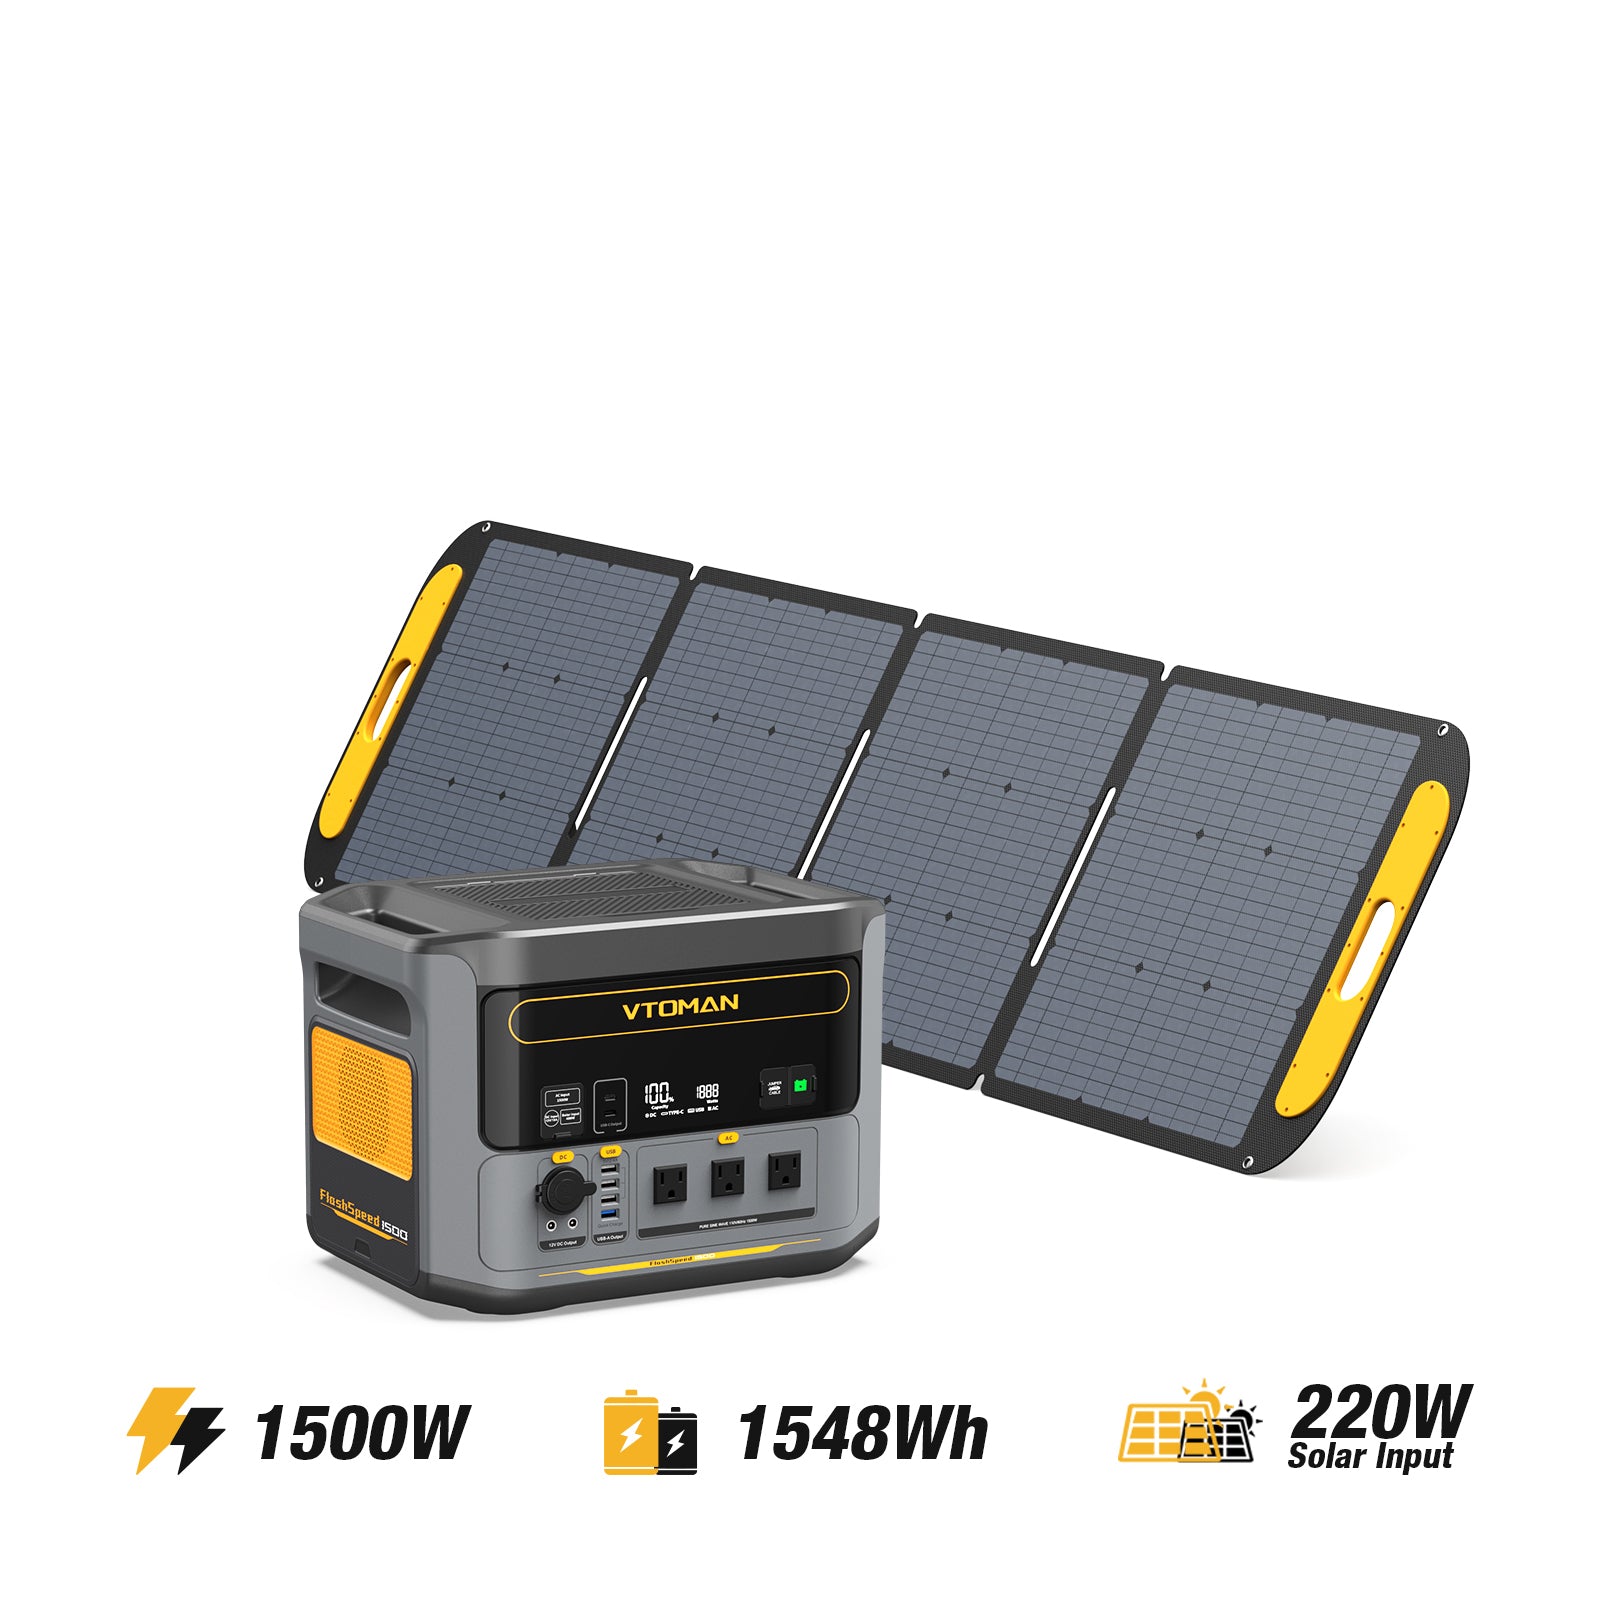 FlashSpeed 1500W/1548Wh 220W Solar Panel